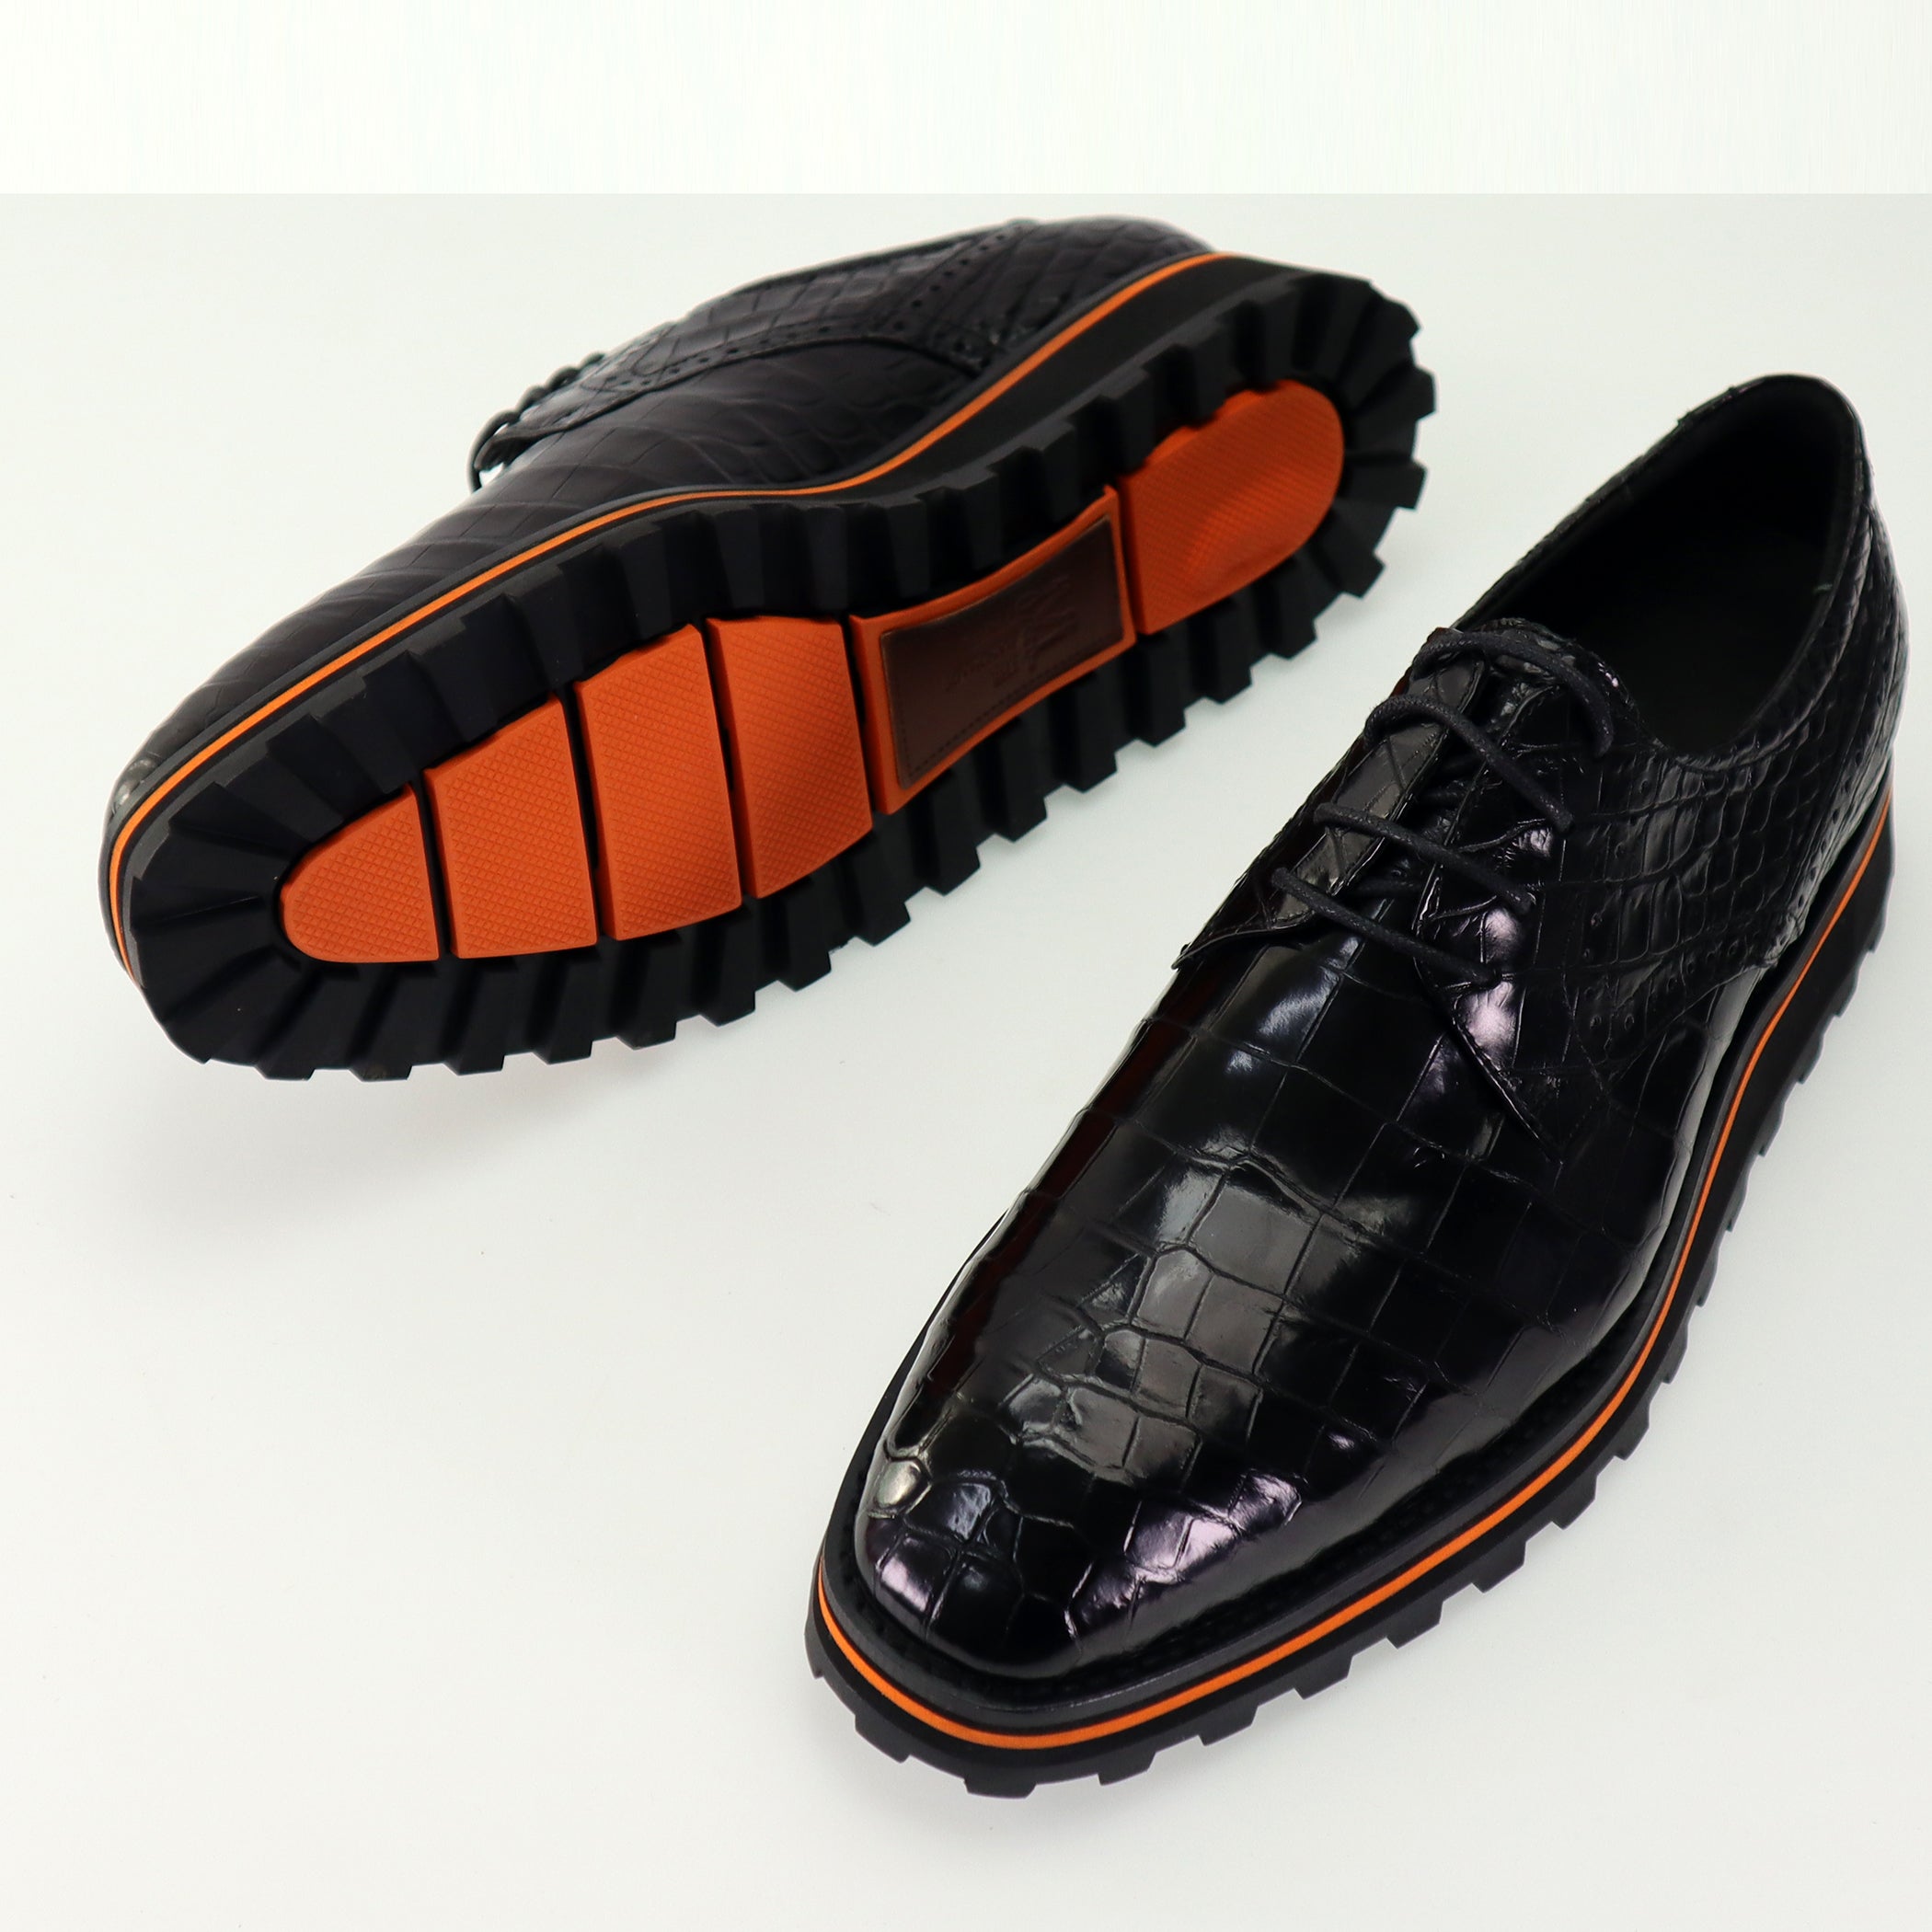 Men's Shoes Genuine Crocodile Alligator Skin Leather Handmade Black Size 7 - Size 11US #323